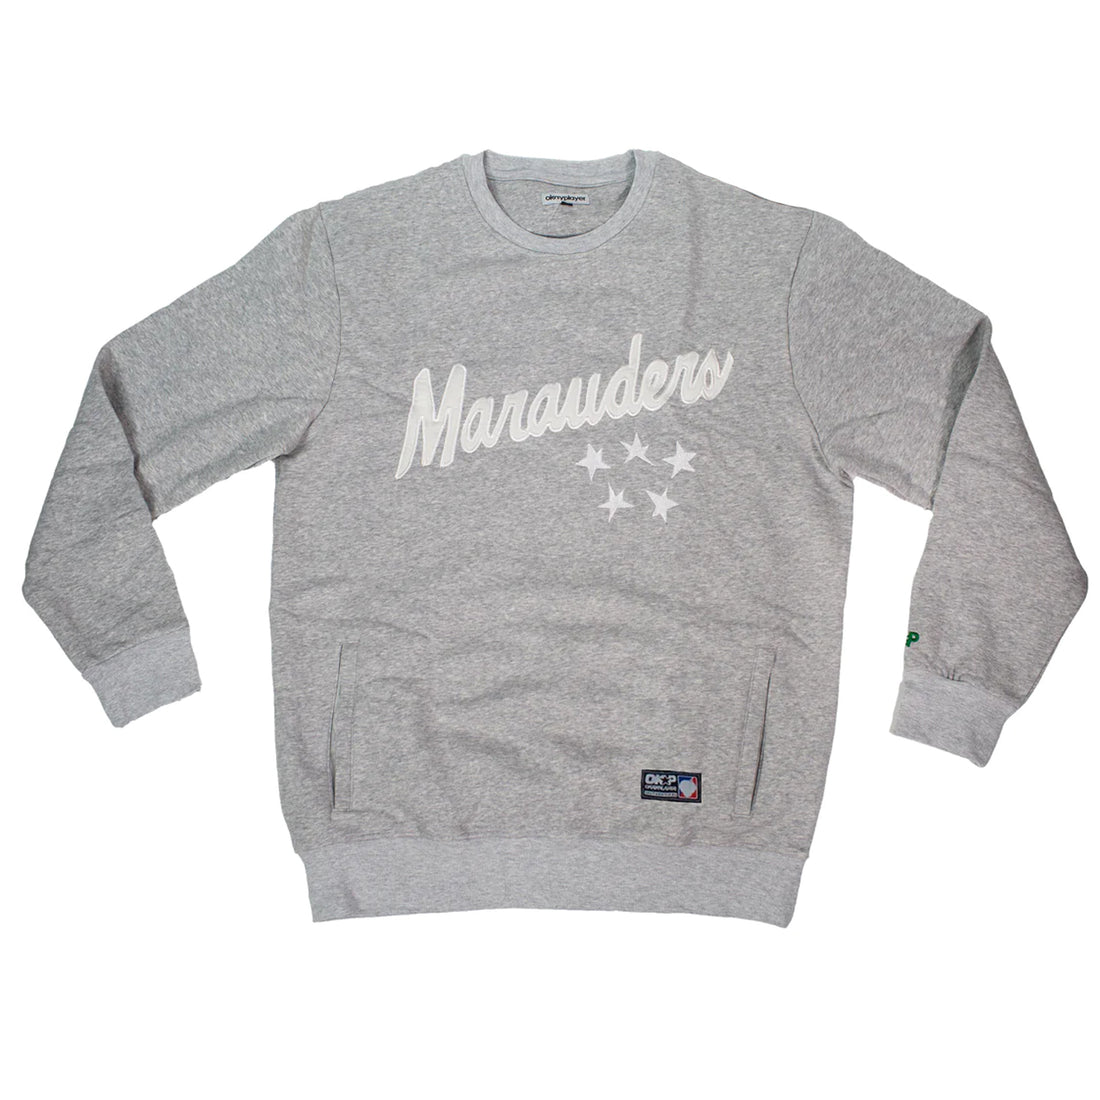 Marauders Crewneck Heather Grey Sweatshirt